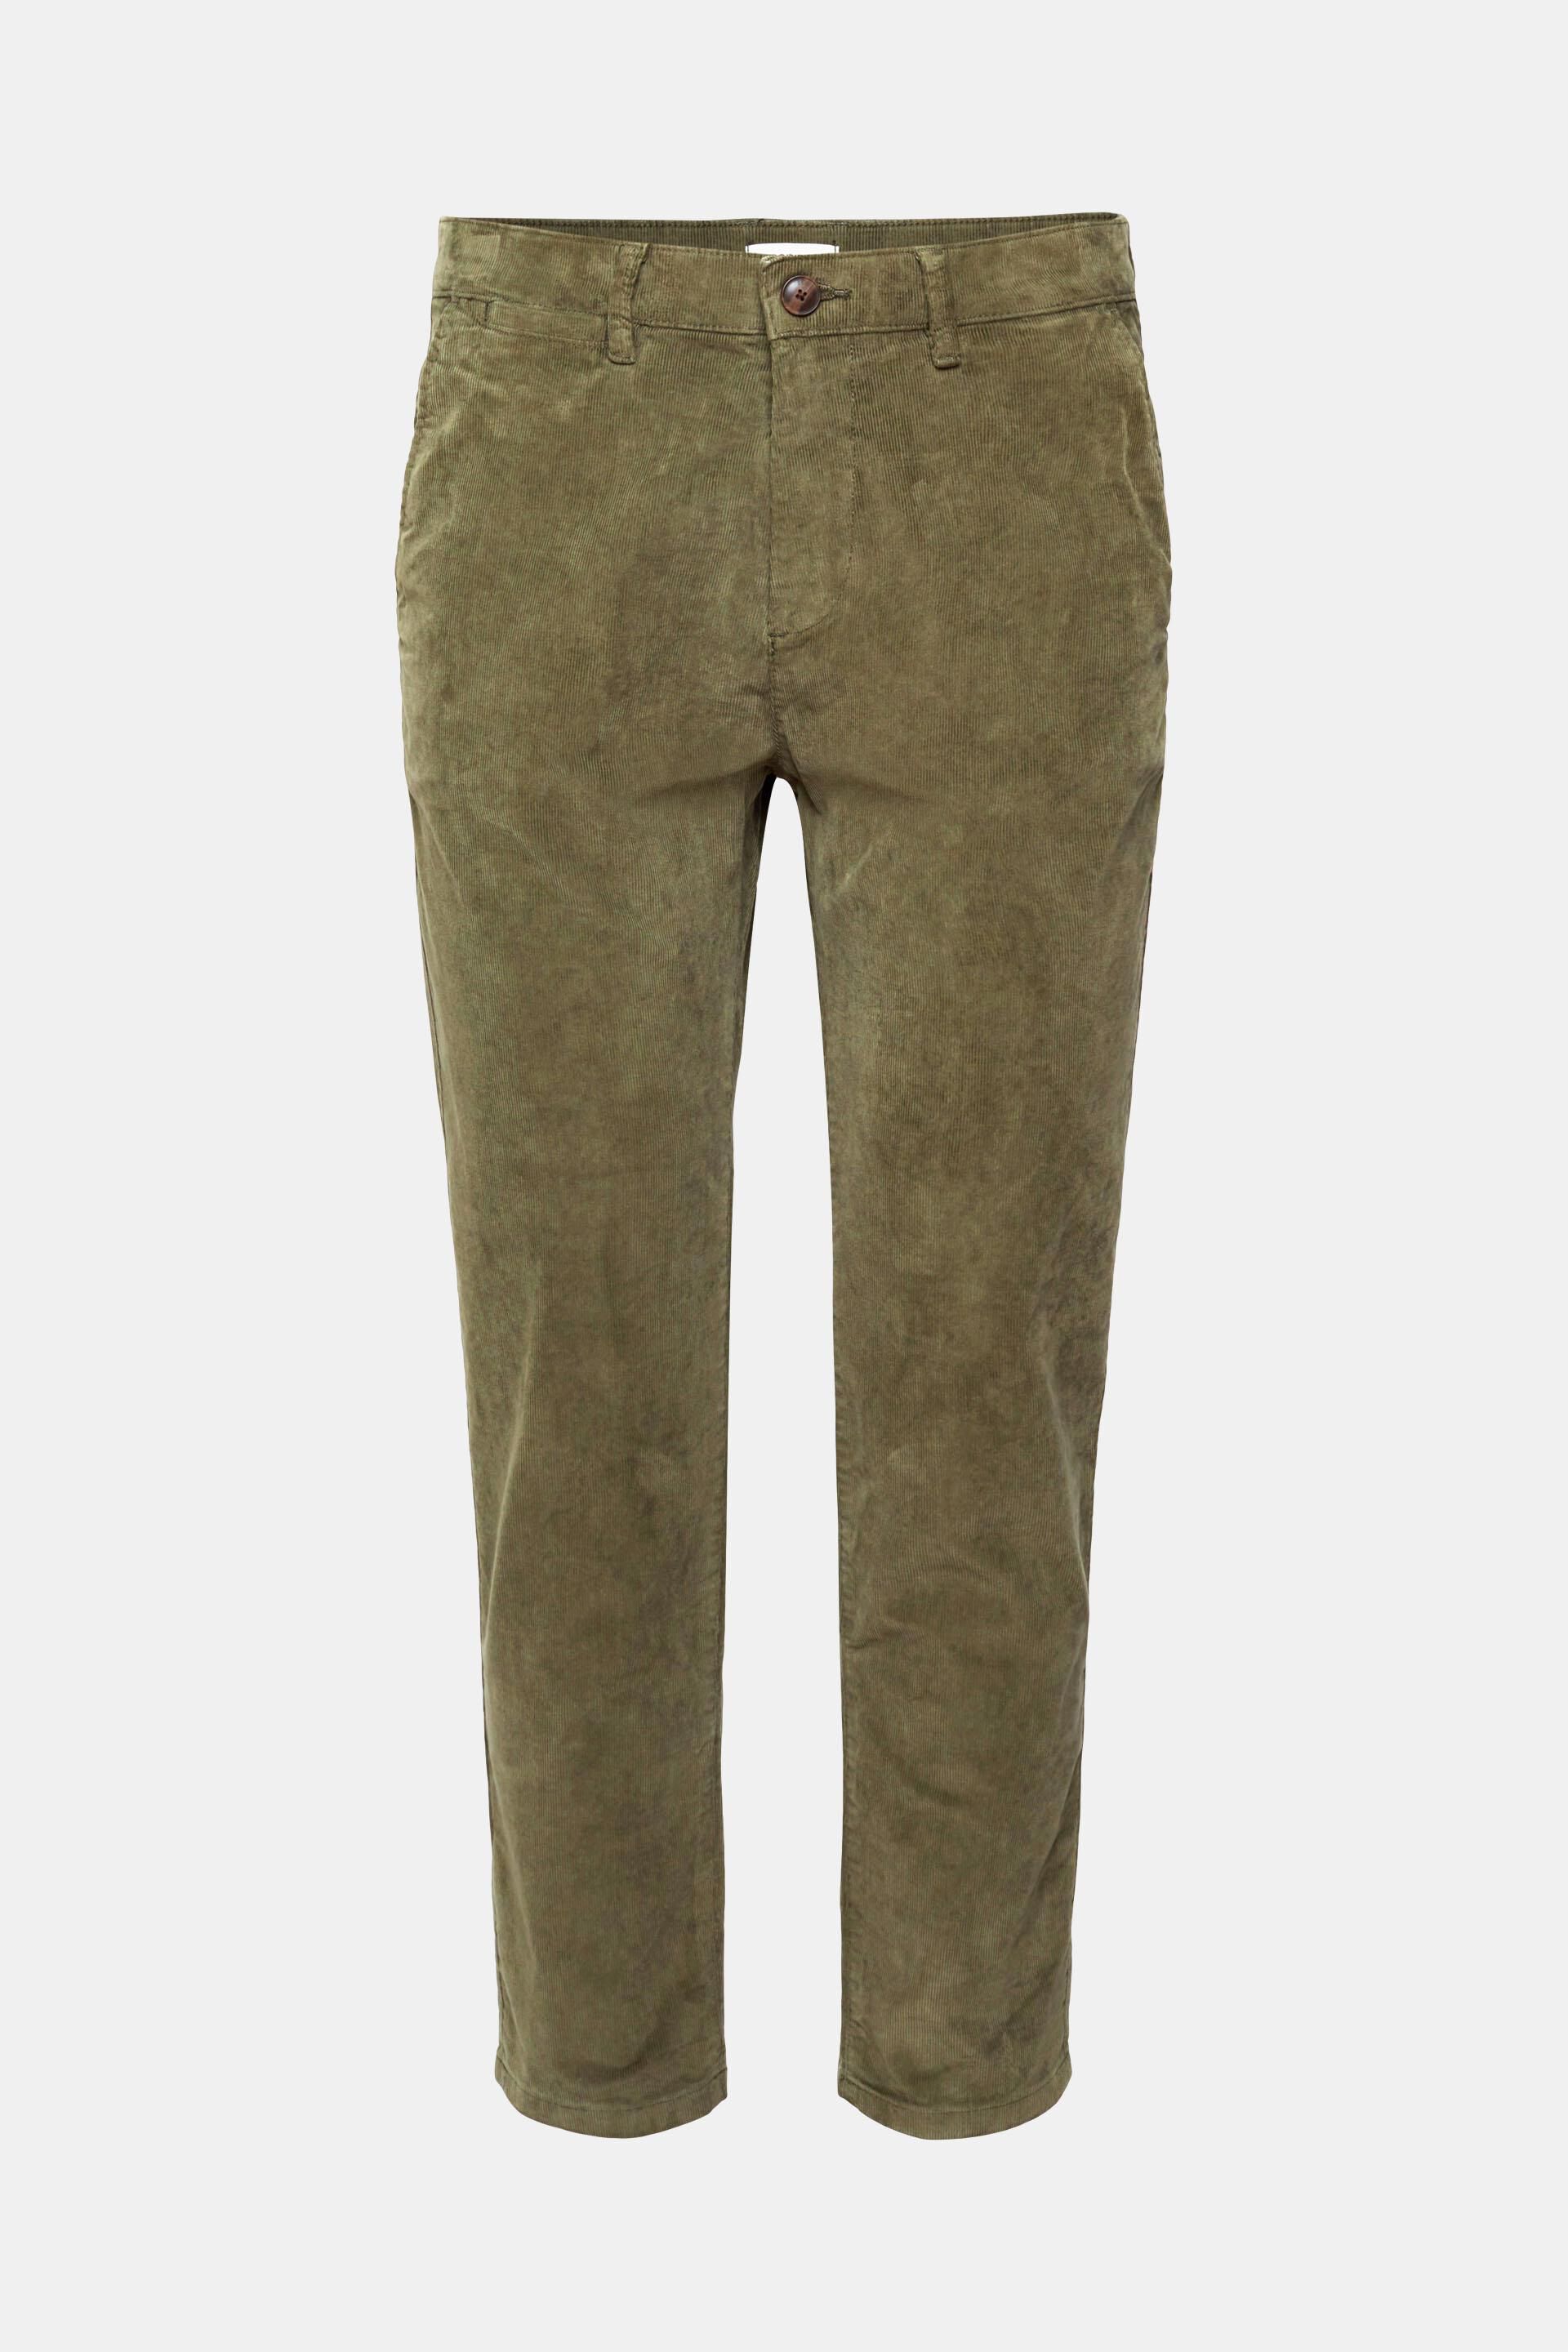 discount 71% H&M slacks KIDS FASHION Trousers Casual Green 140                  EU 